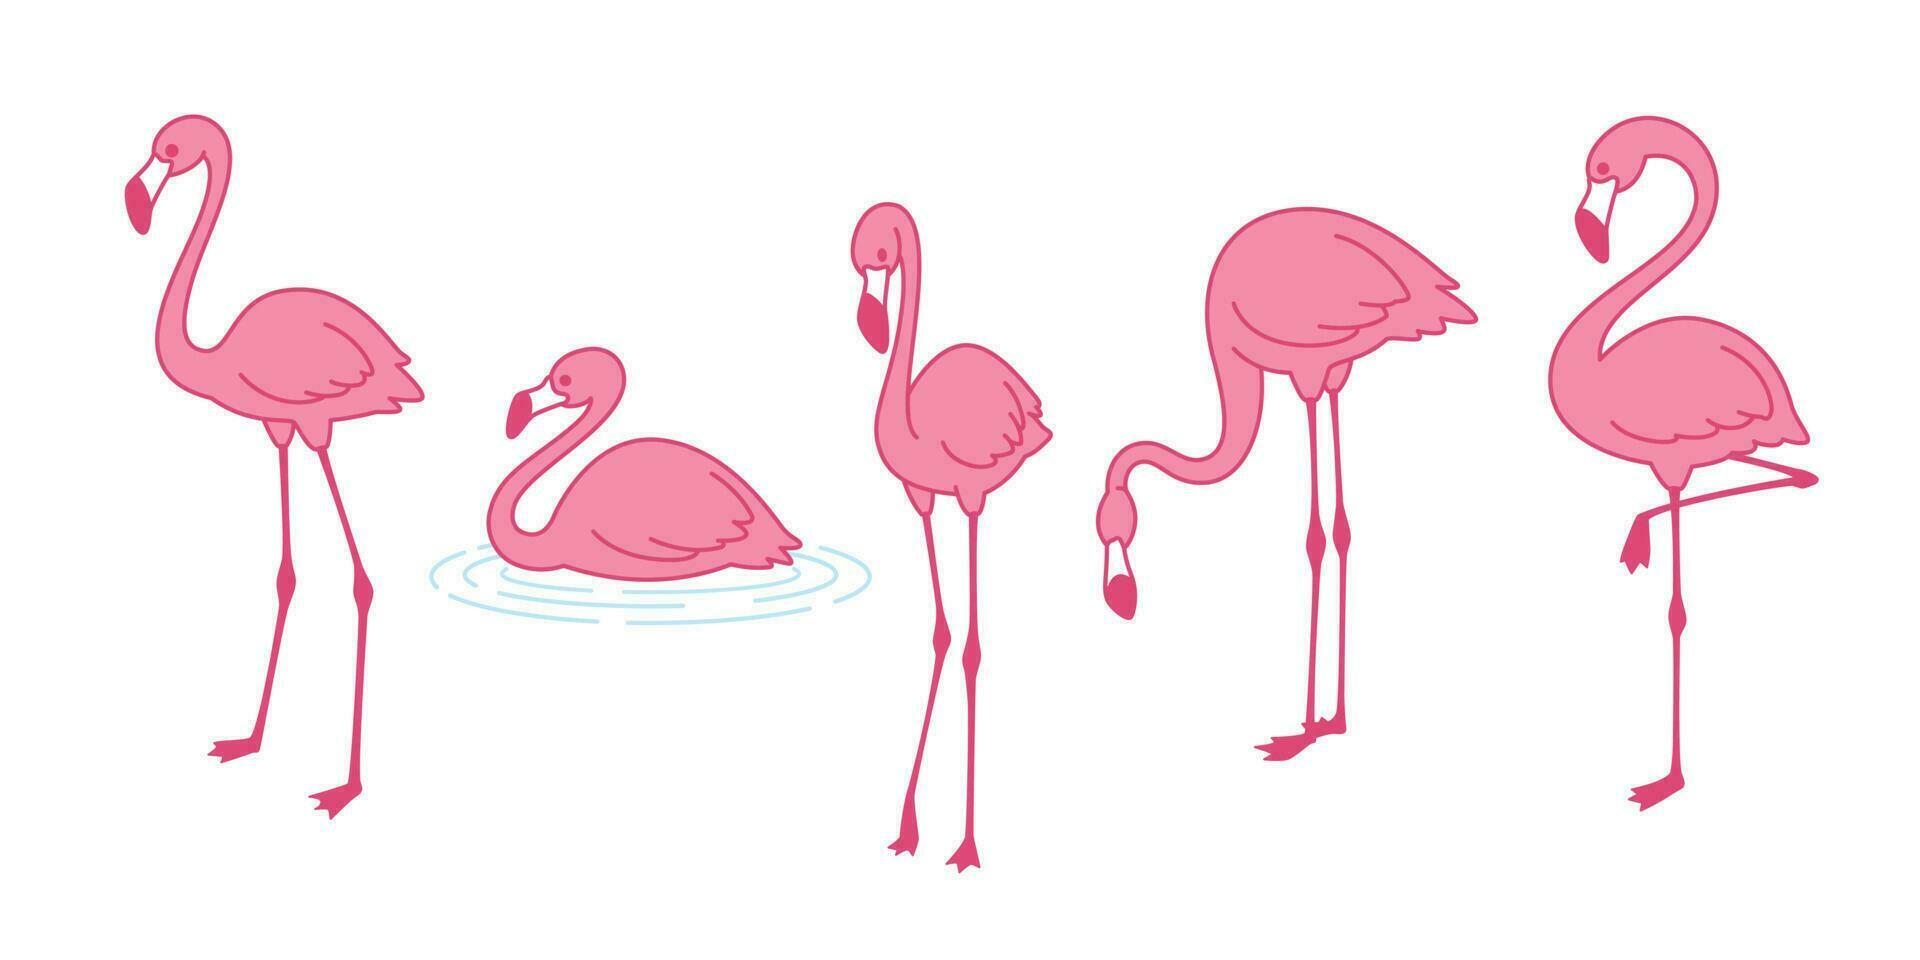 Cartoon pink flamingo vector set icon Cute flamingos collection Flamingo character animal exotic nature wild fauna illustration doodle